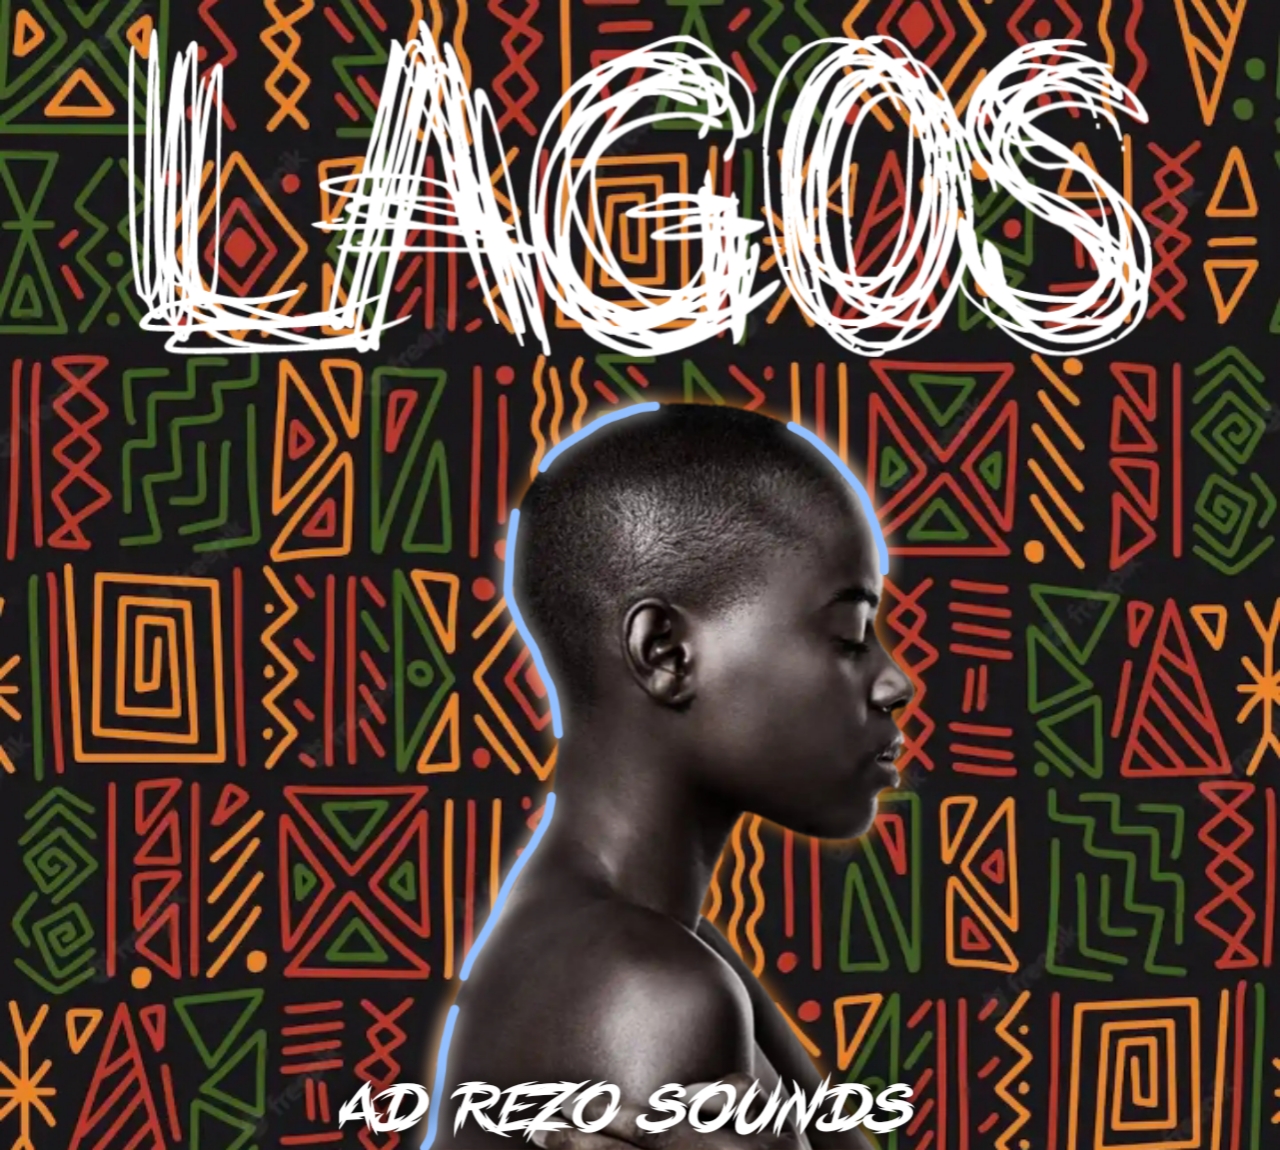 Lagos - AD rezo sounds